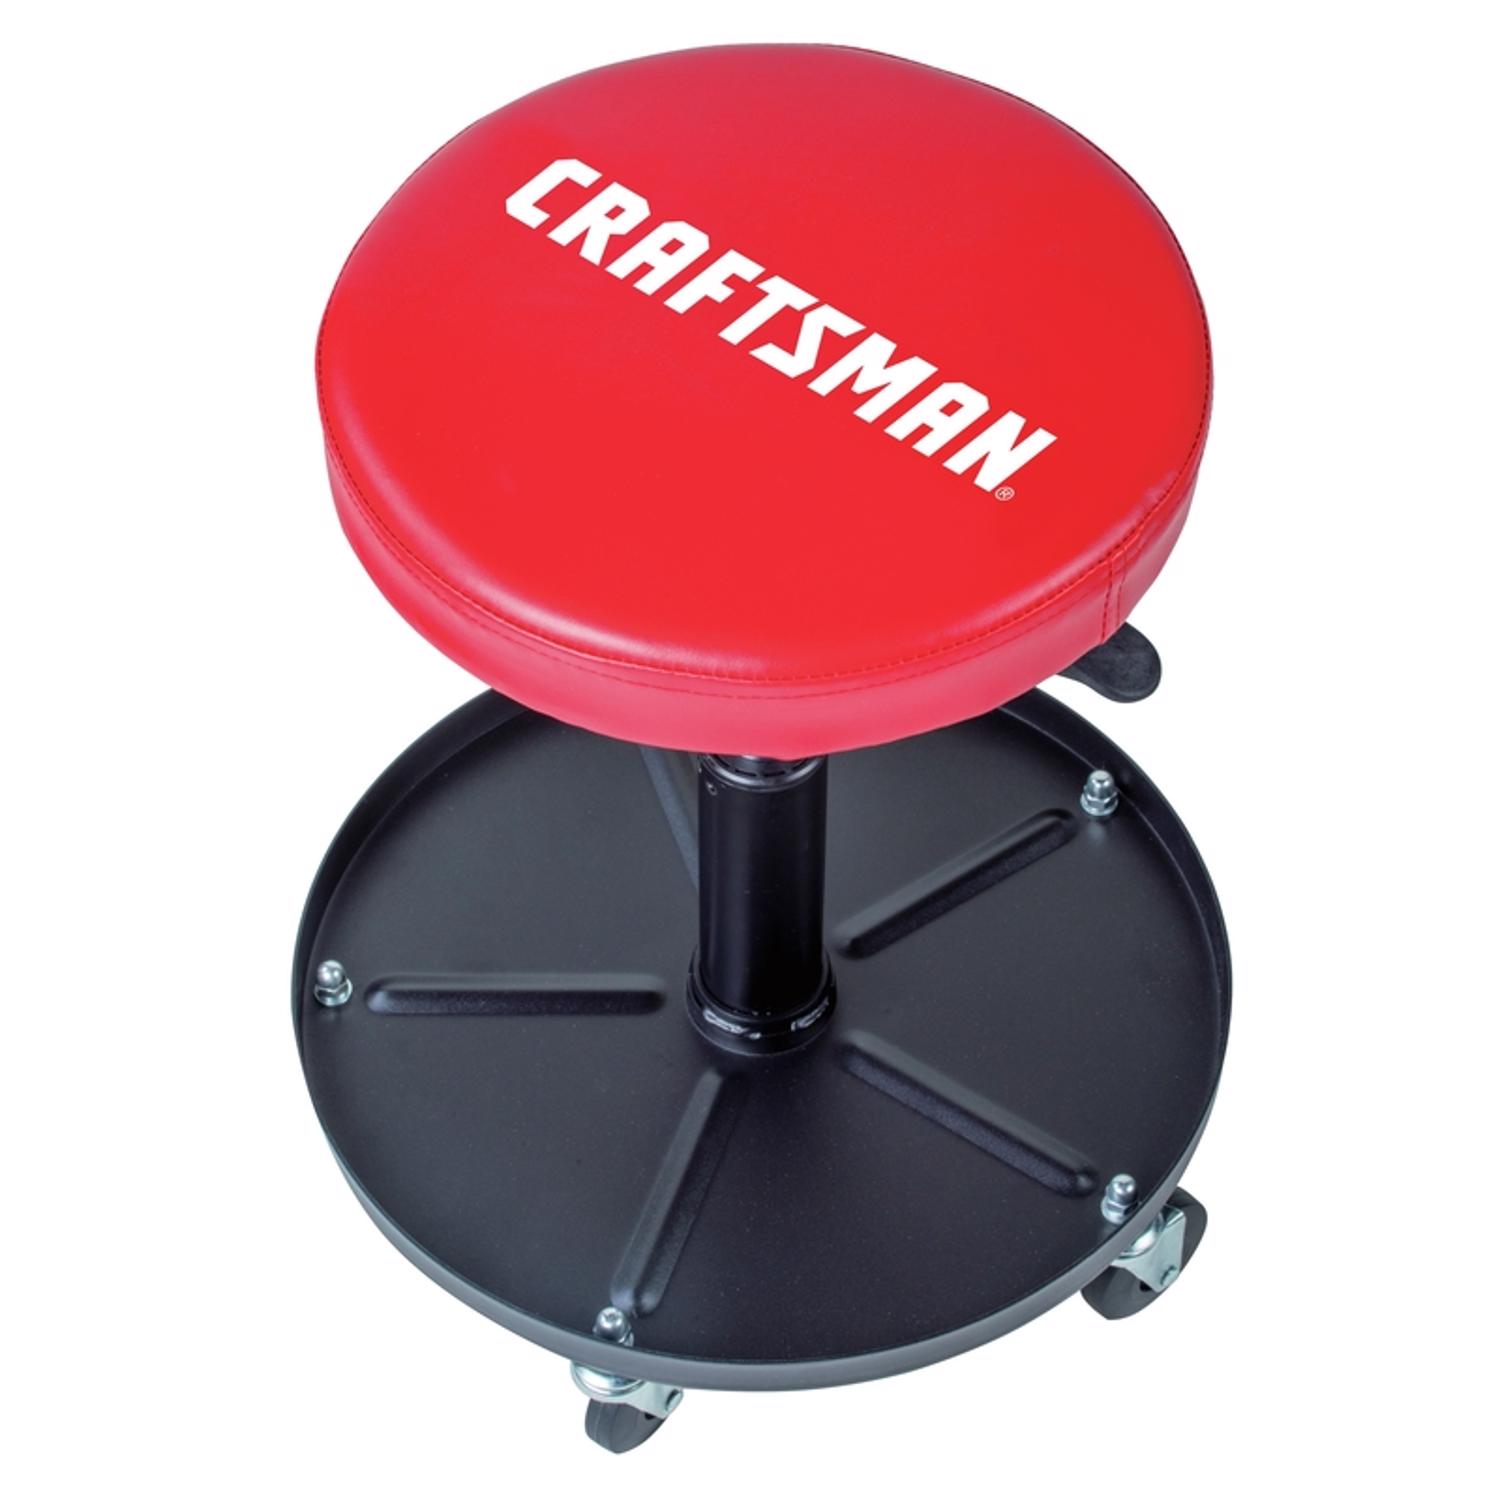 Craftsman Adjustable Mechanics Seat with Tray